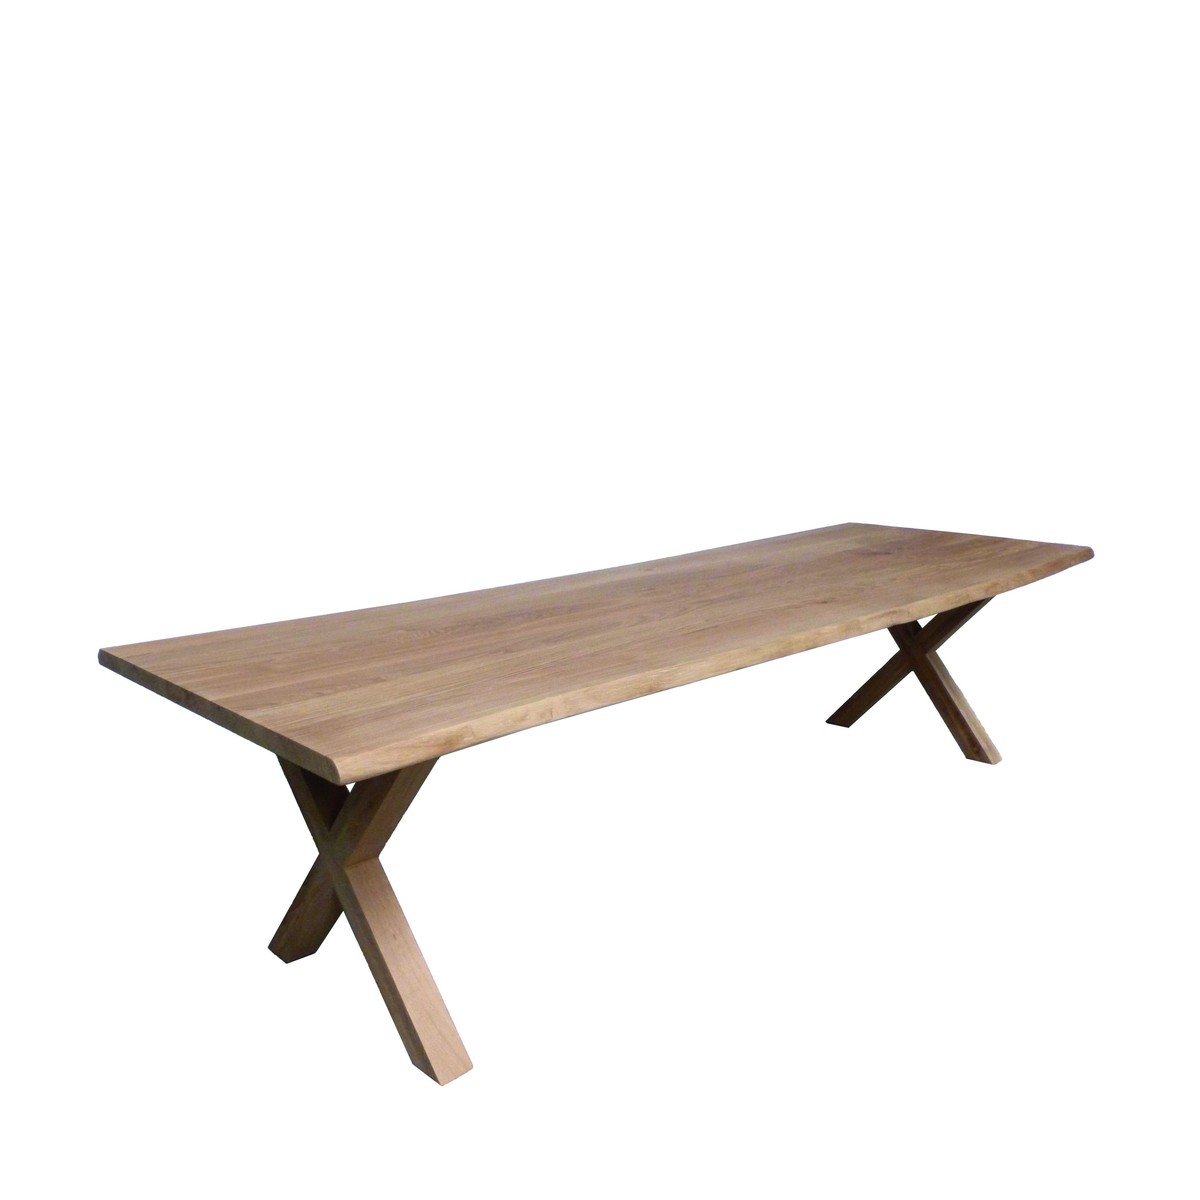   Table Elmo Trunk rectangulaire  160x100x77cm